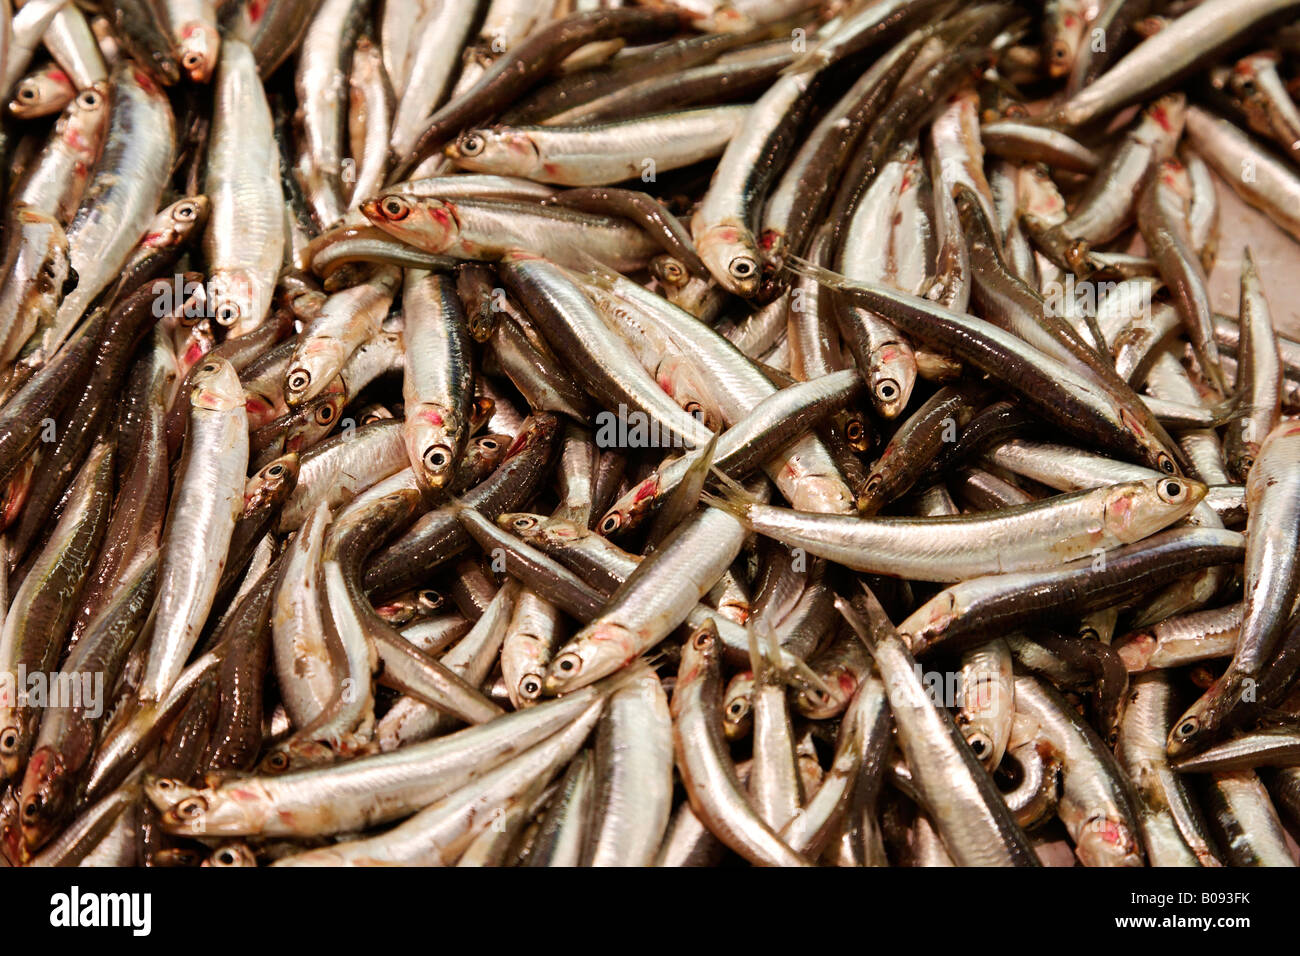 El pescado se vende en un mercado en Mallorca, Islas Baleares, España Foto de stock